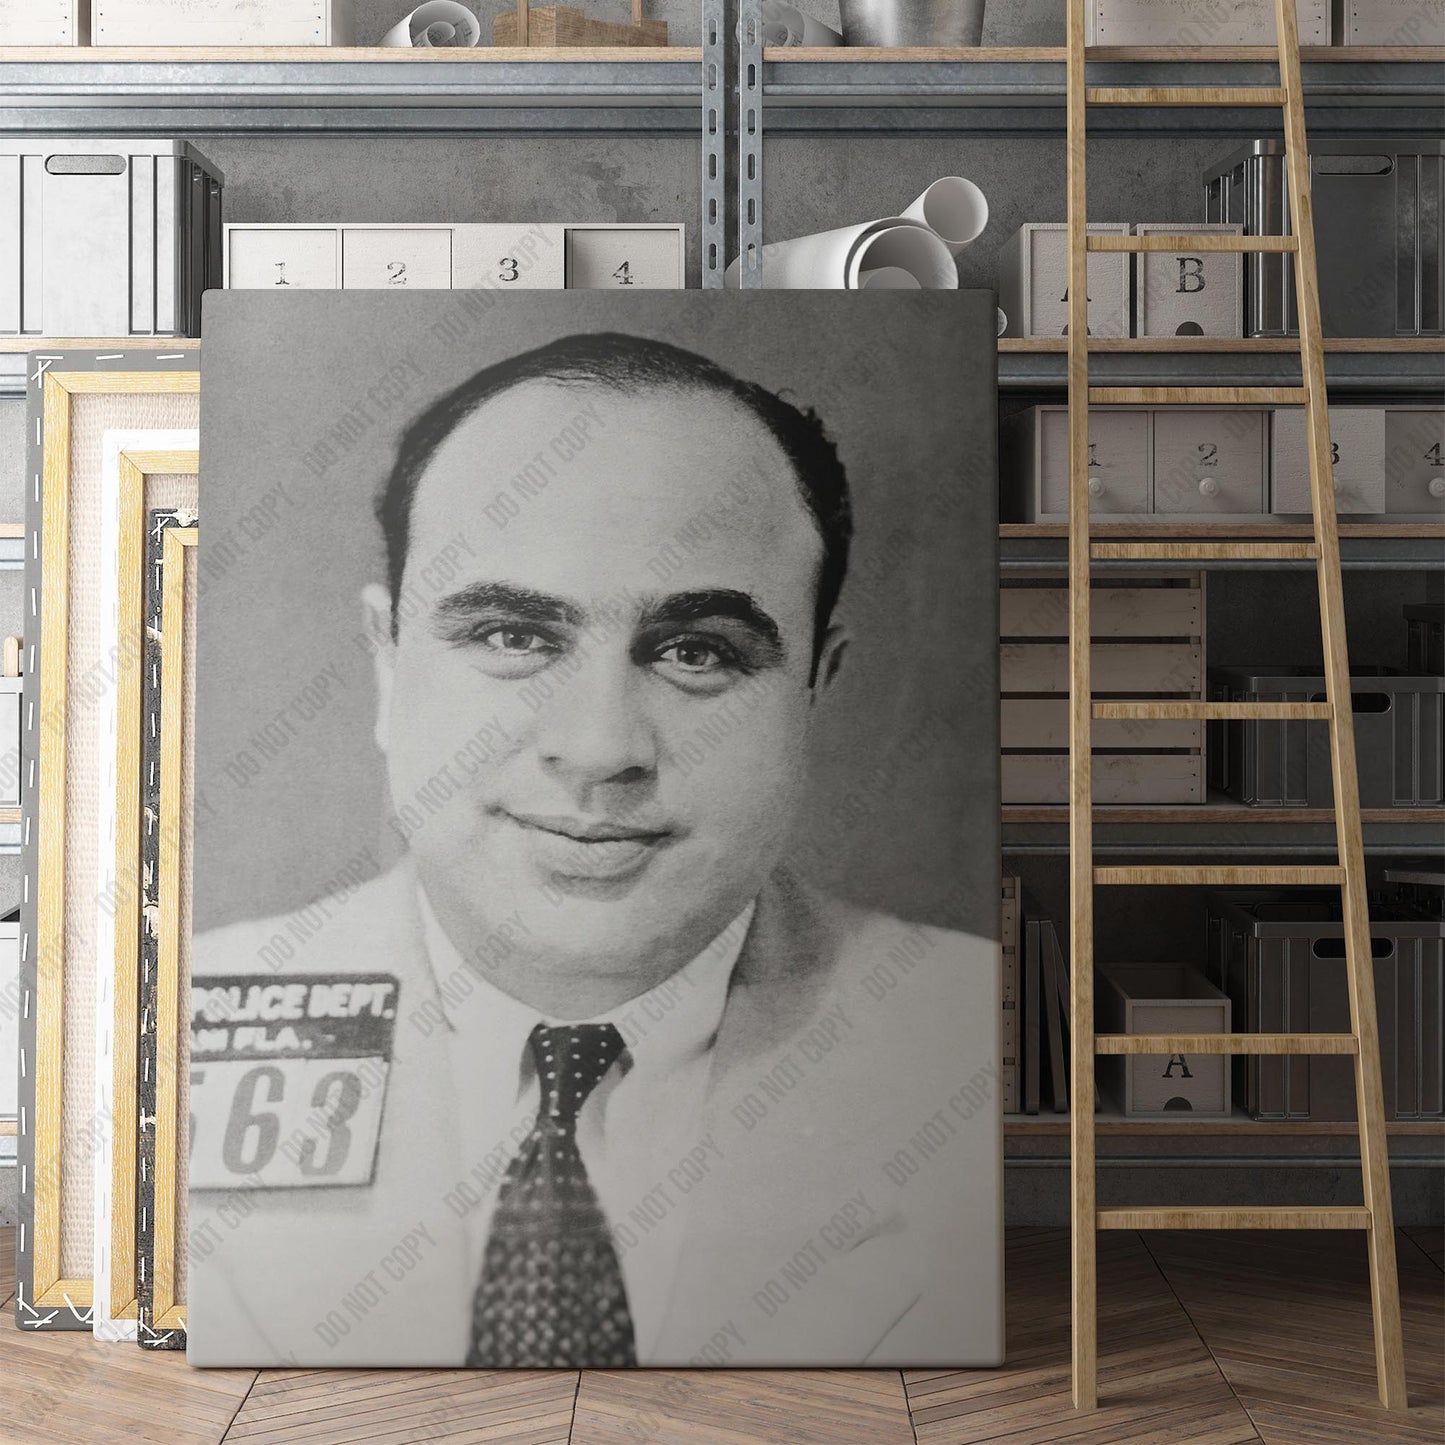 Al Capone Chicago Prison Mug Shot 1931